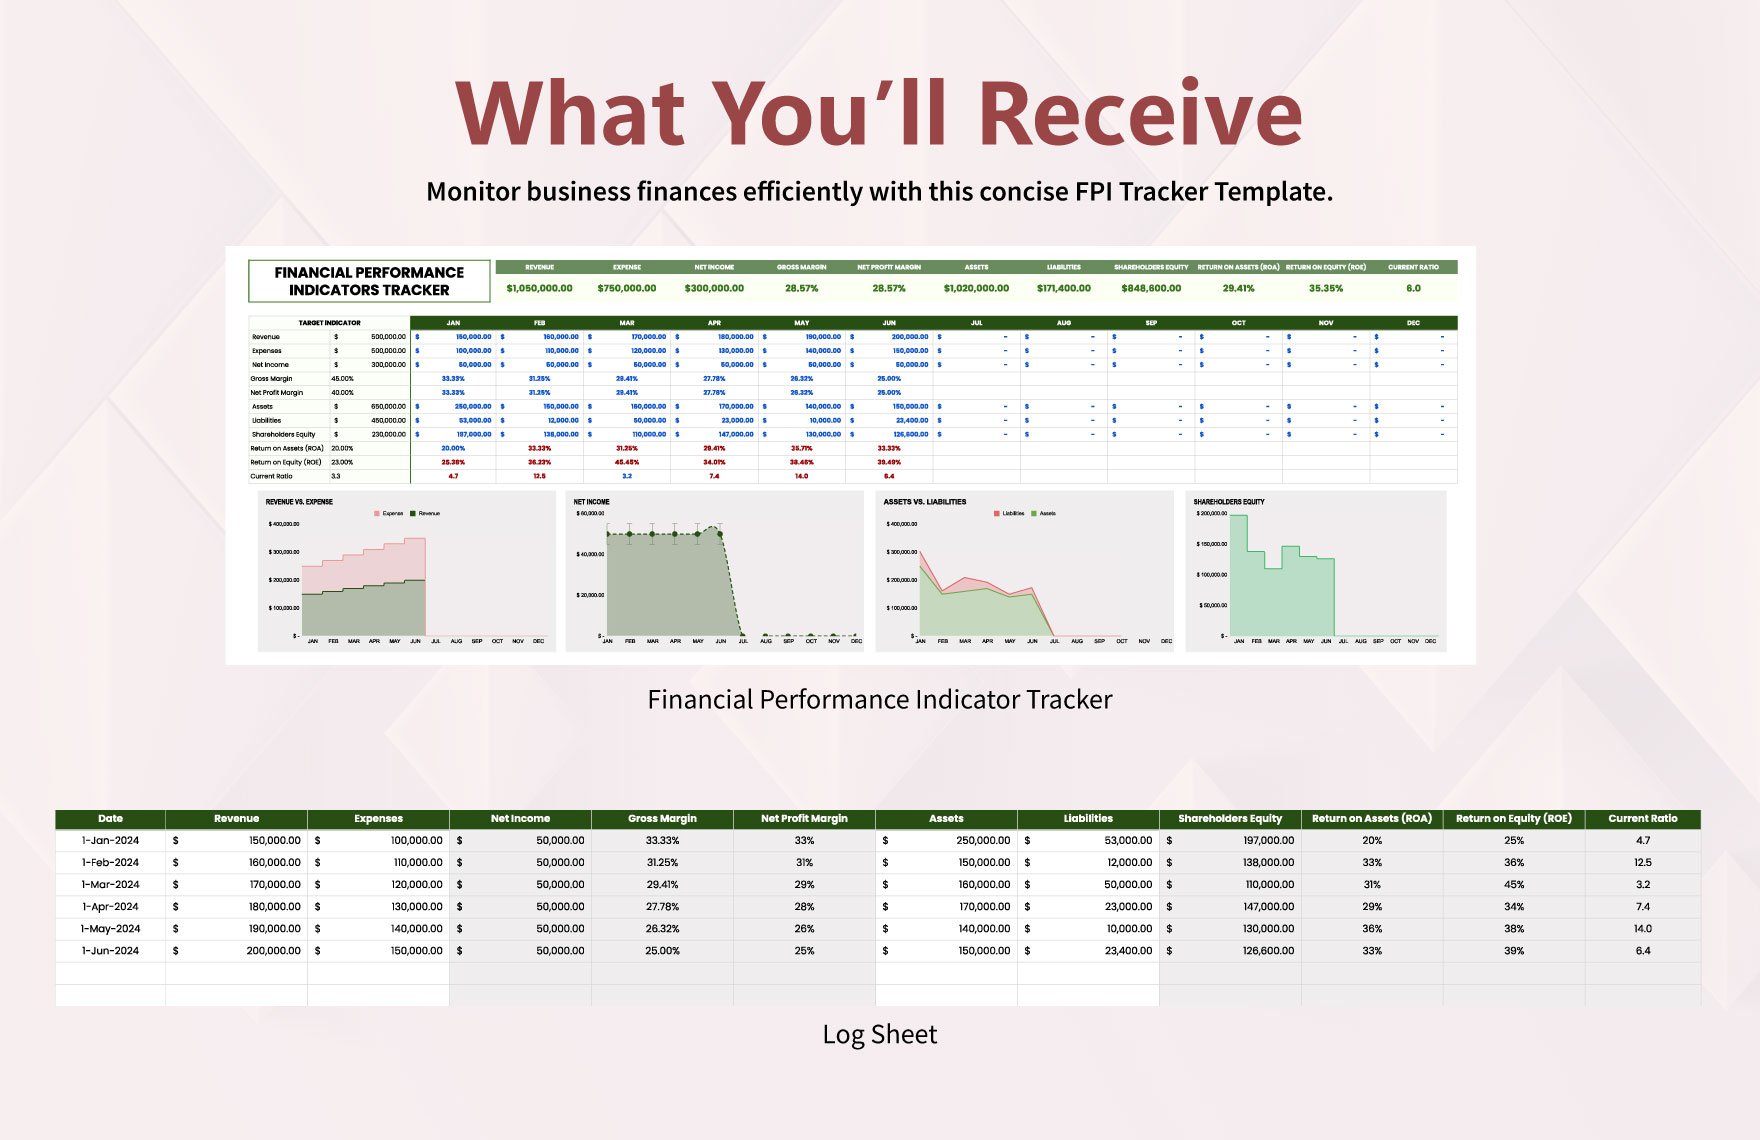 Financial Performance Indicators (FPI) Tracker Template